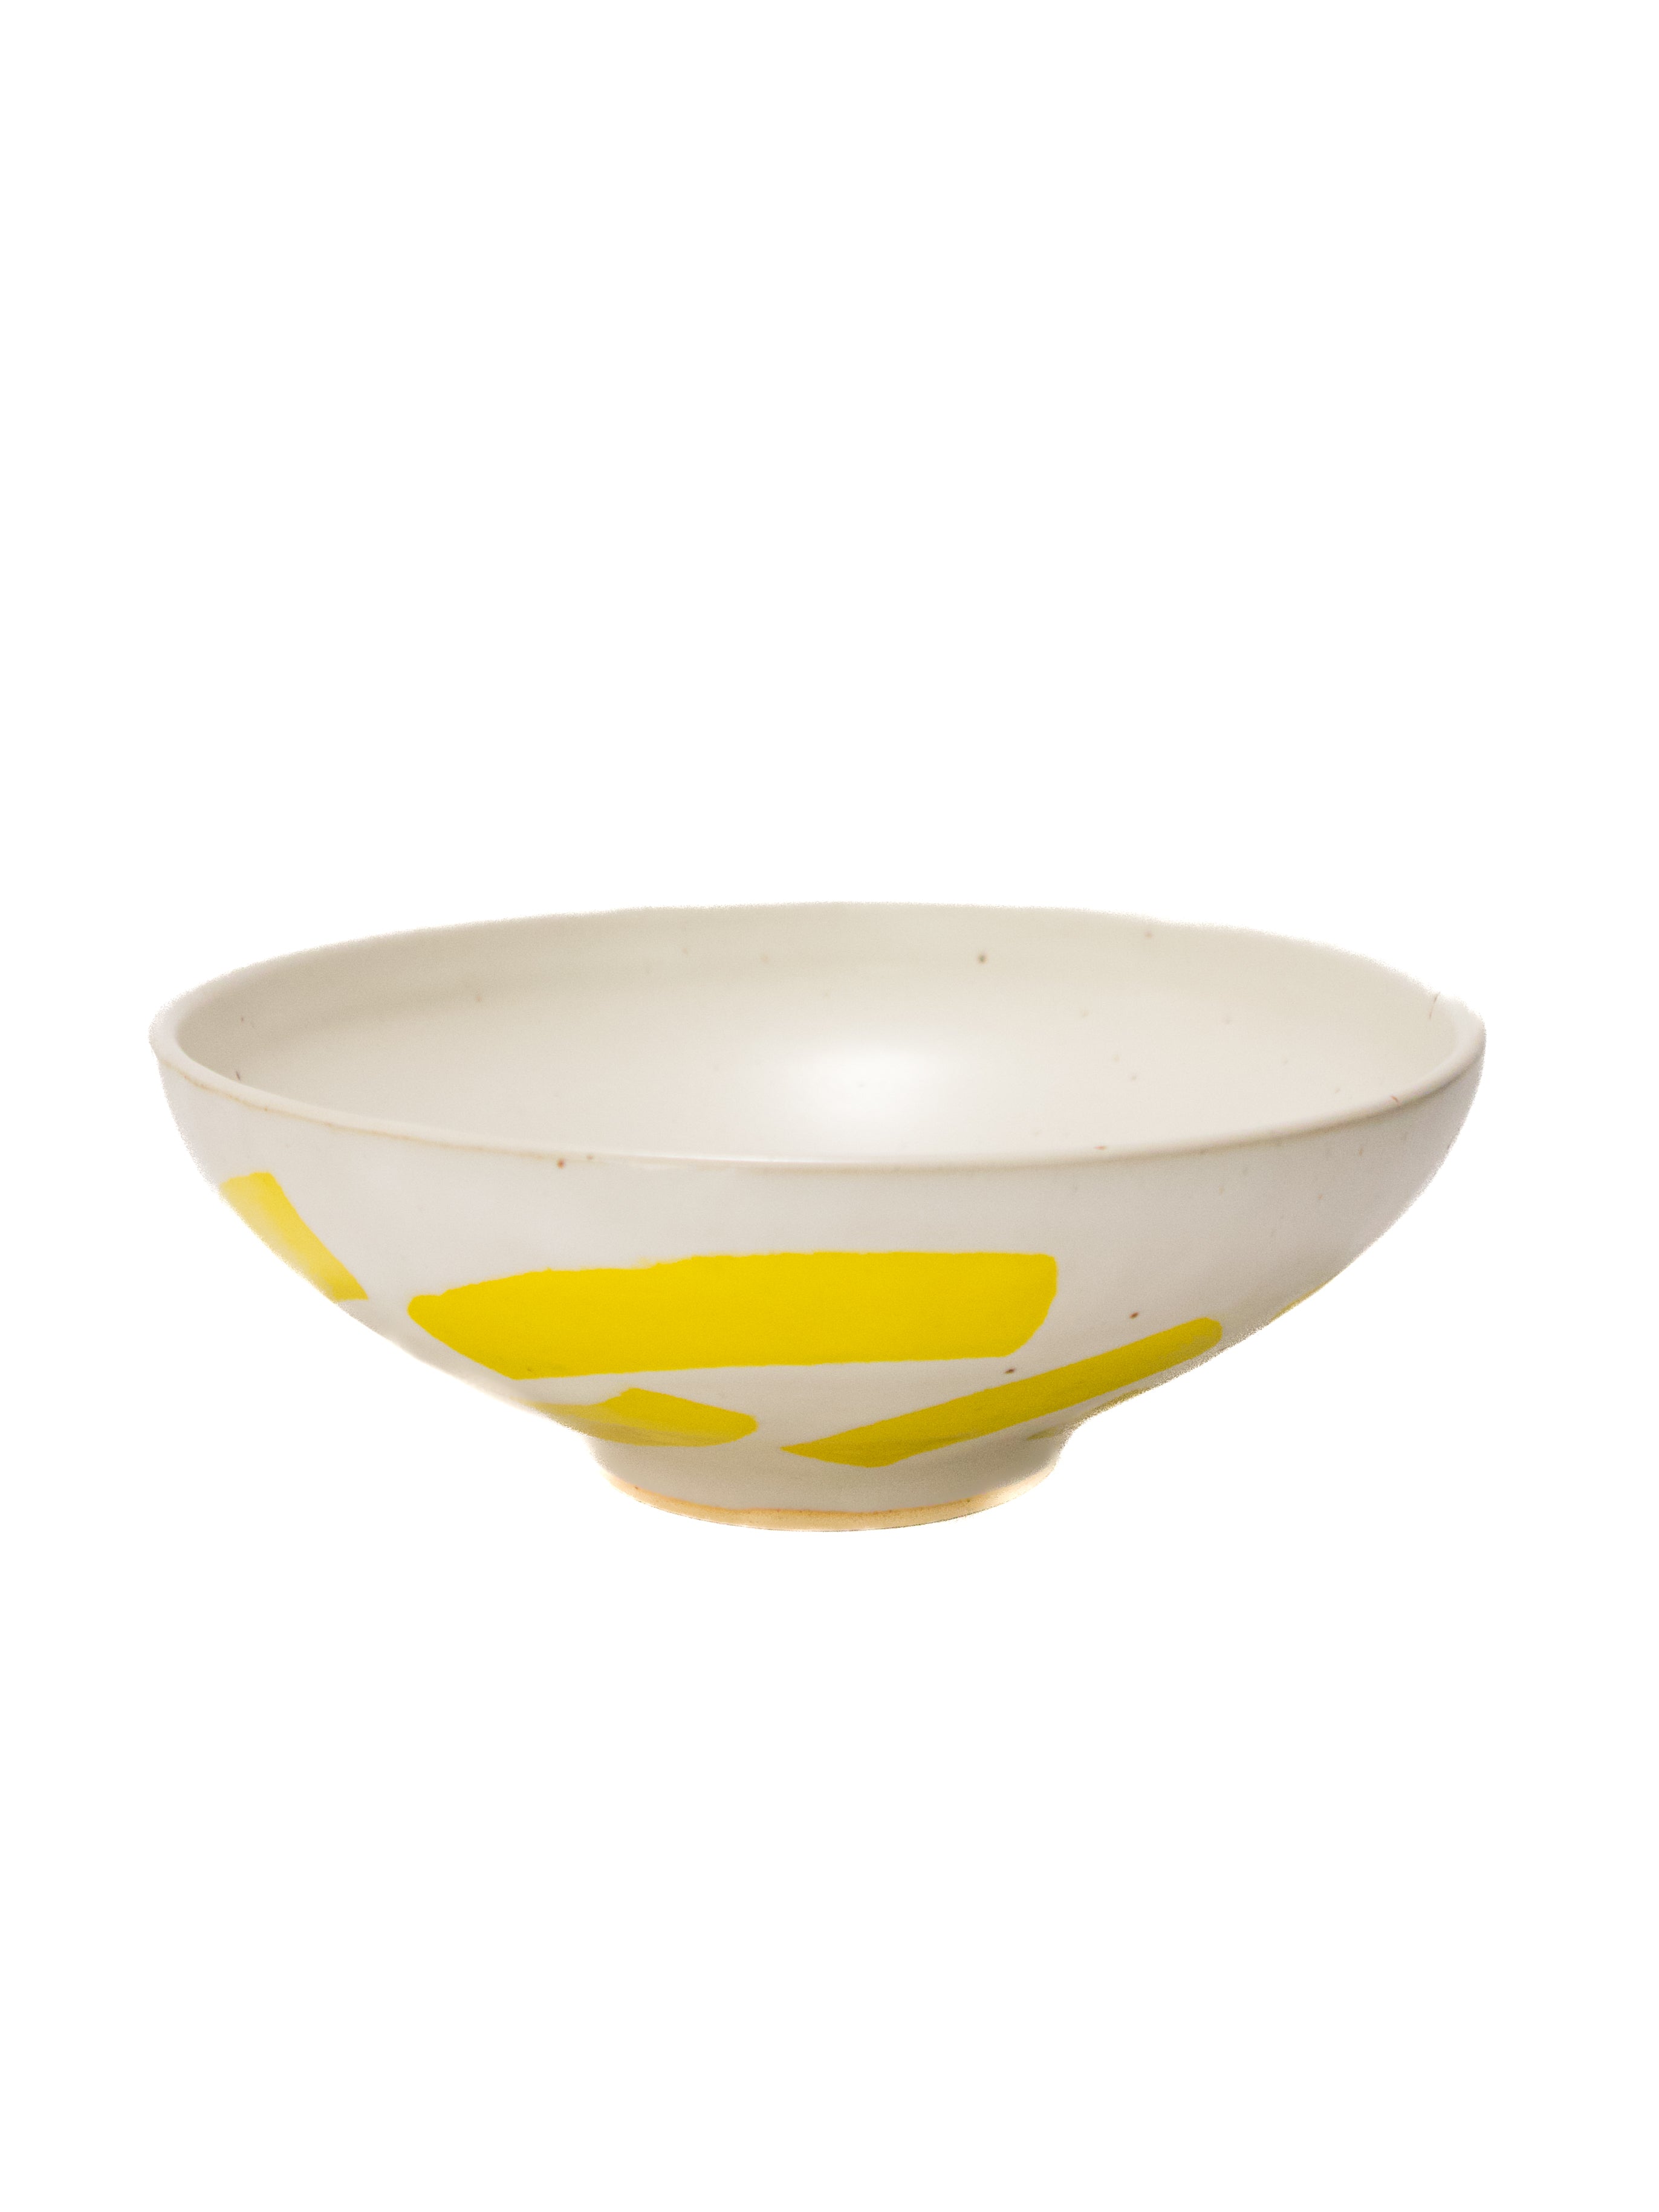 Beginner Ceramics Alabaster Bowl with Sundrop Shapes